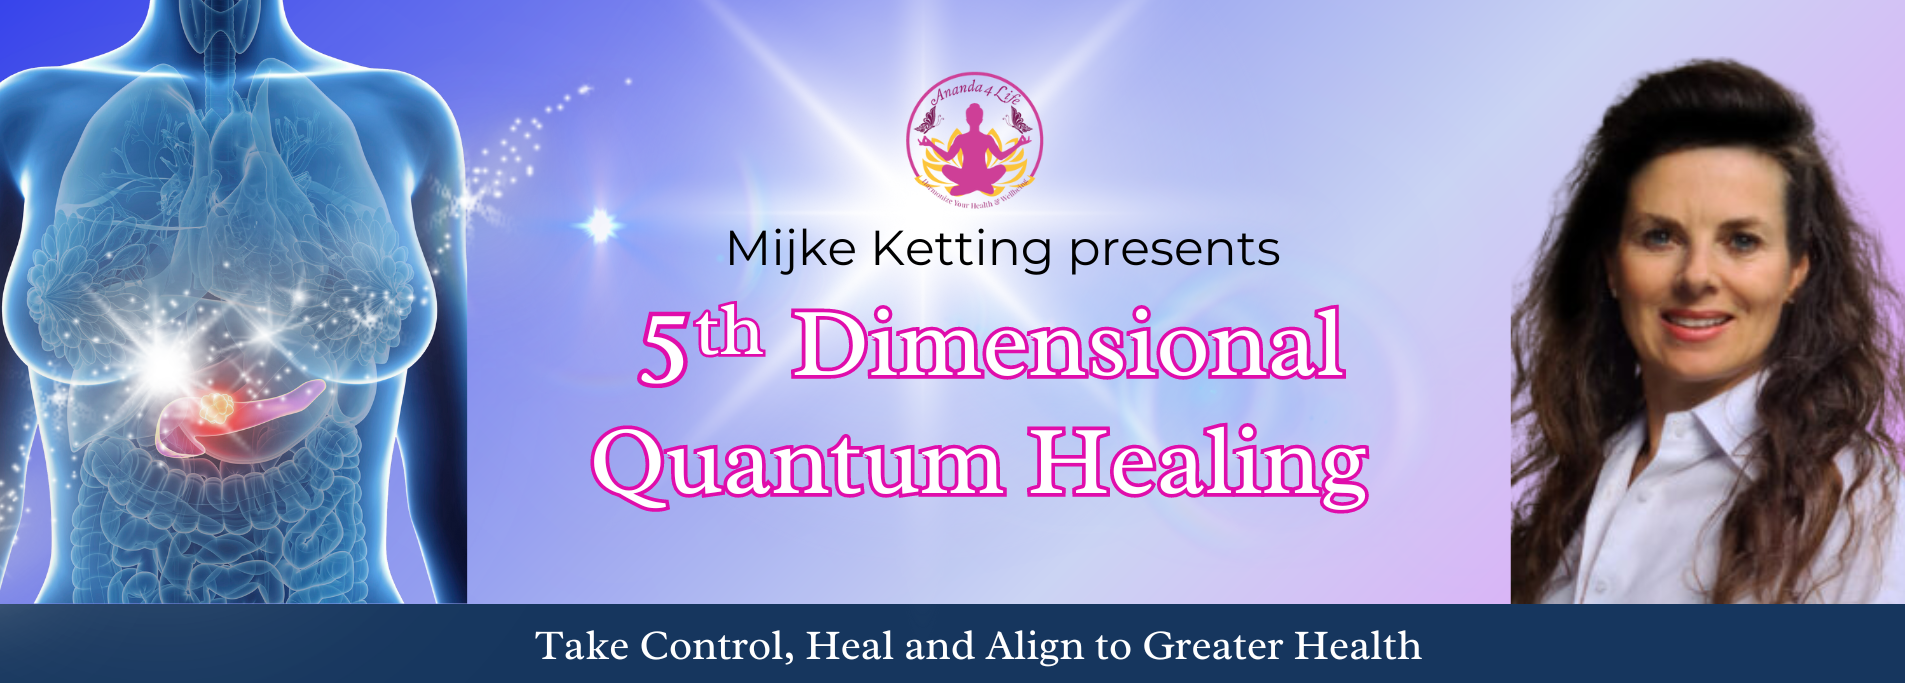 5th Dimensional Quantum Healing 1